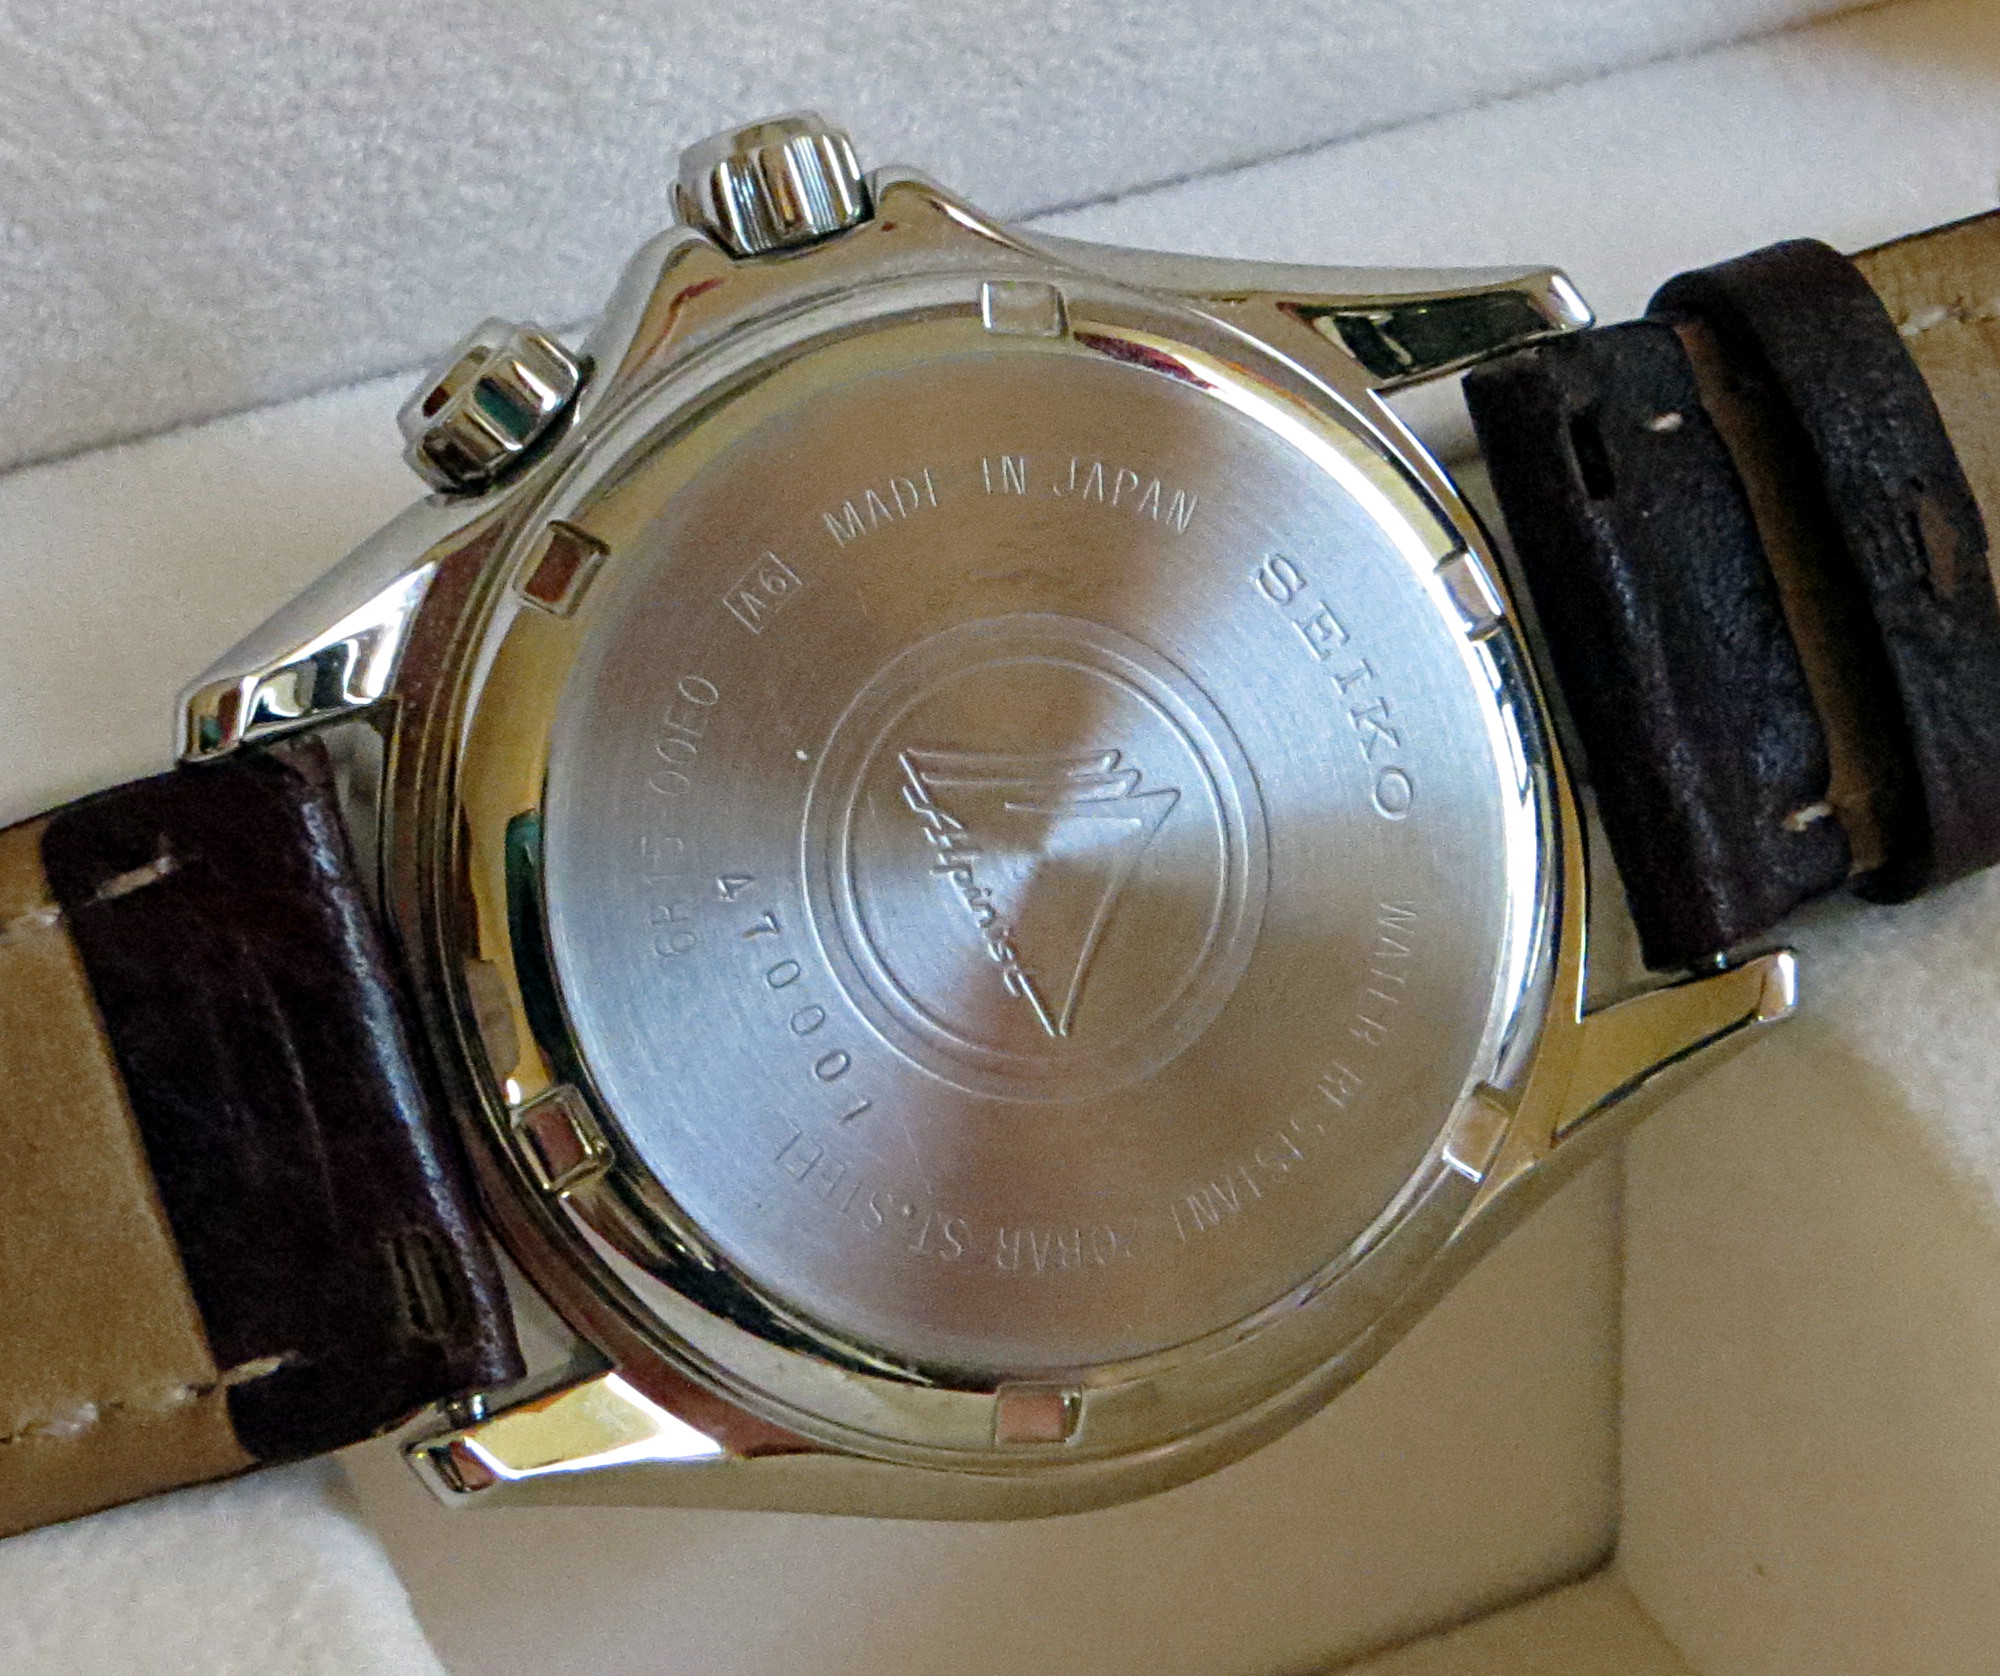 Seiko Alpinist SARB017 – Watches at 